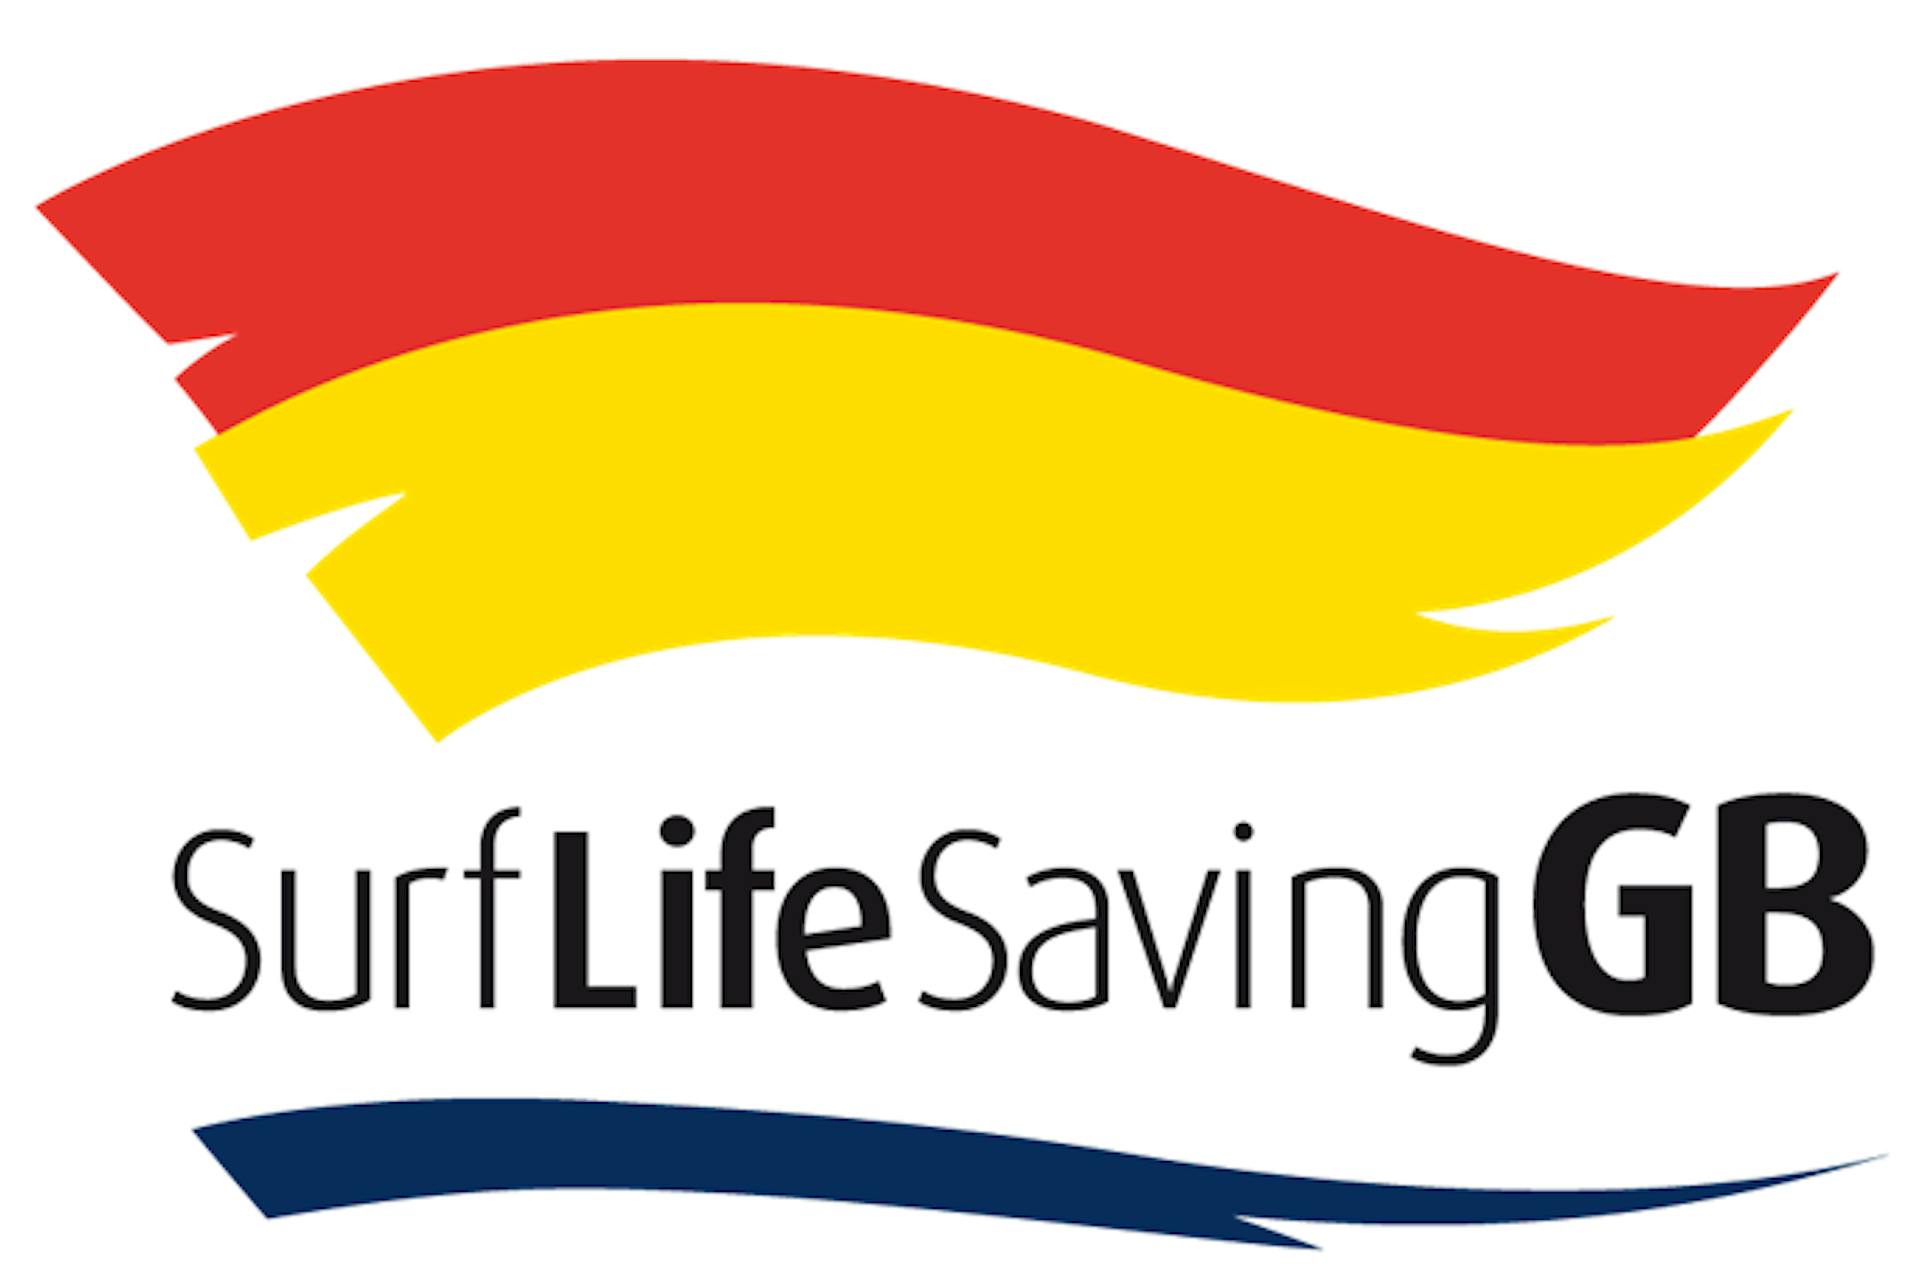 Surf Life Saving GB